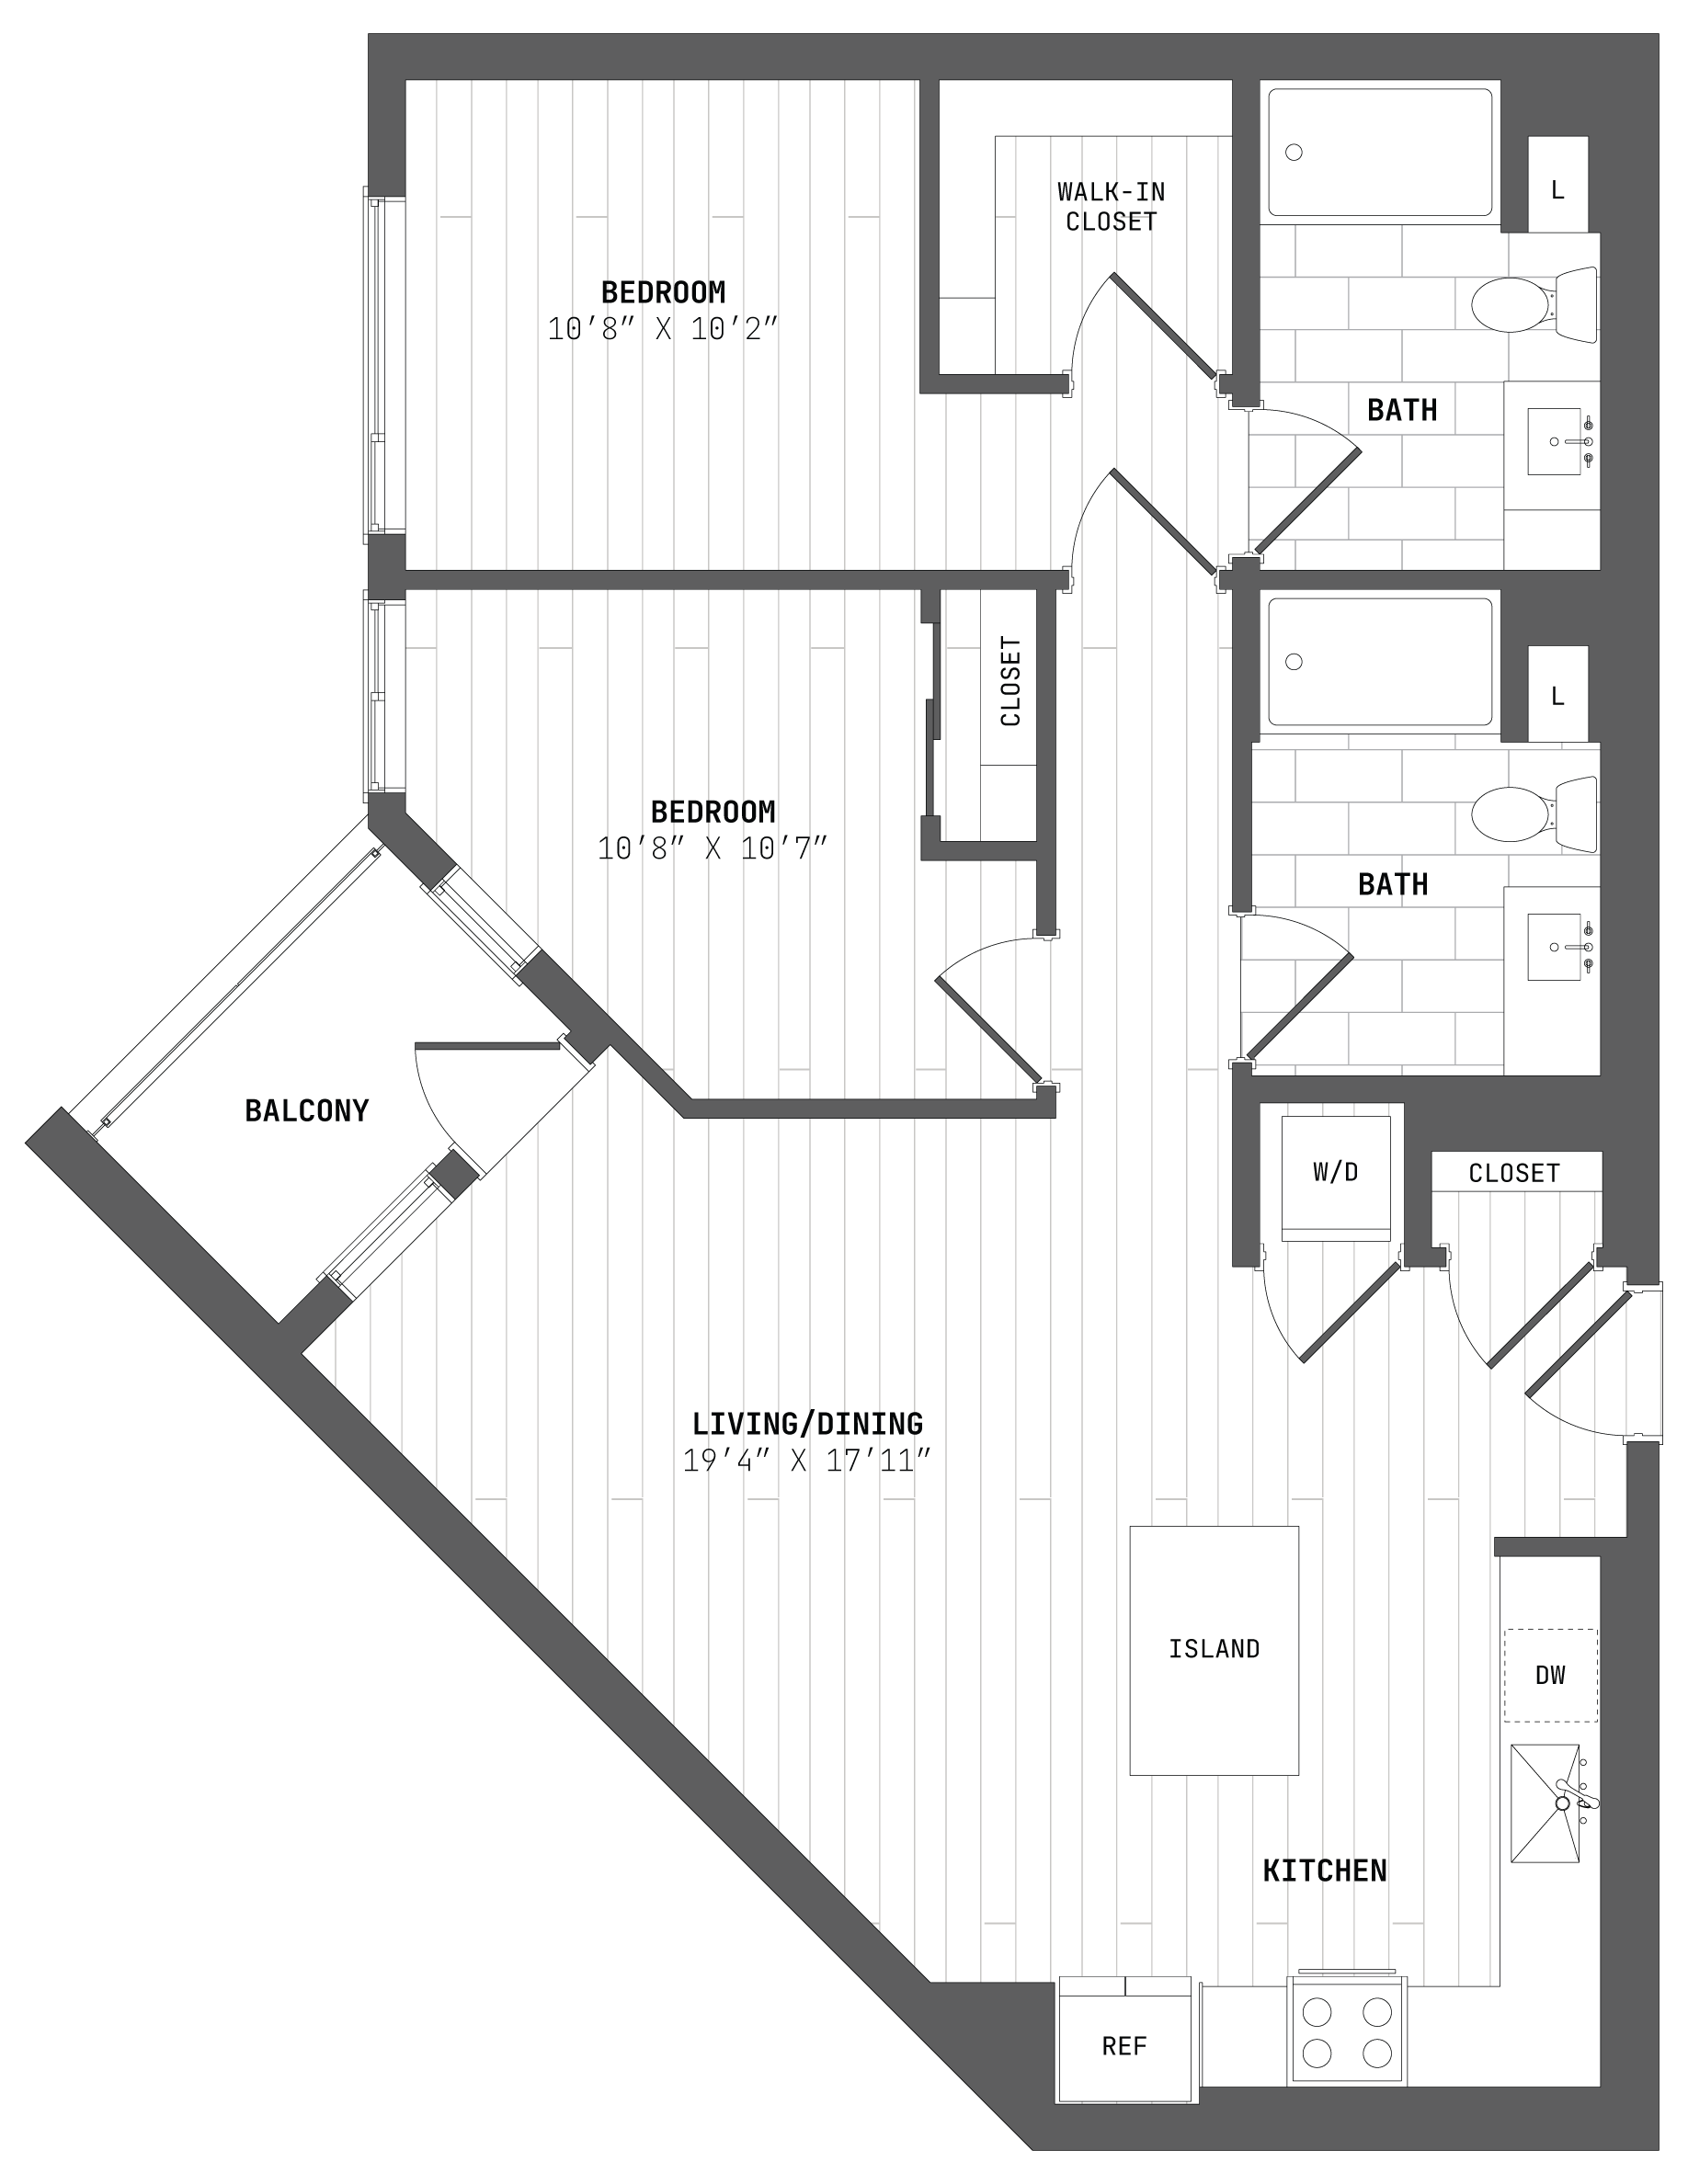 Apartment 4785261 floorplan